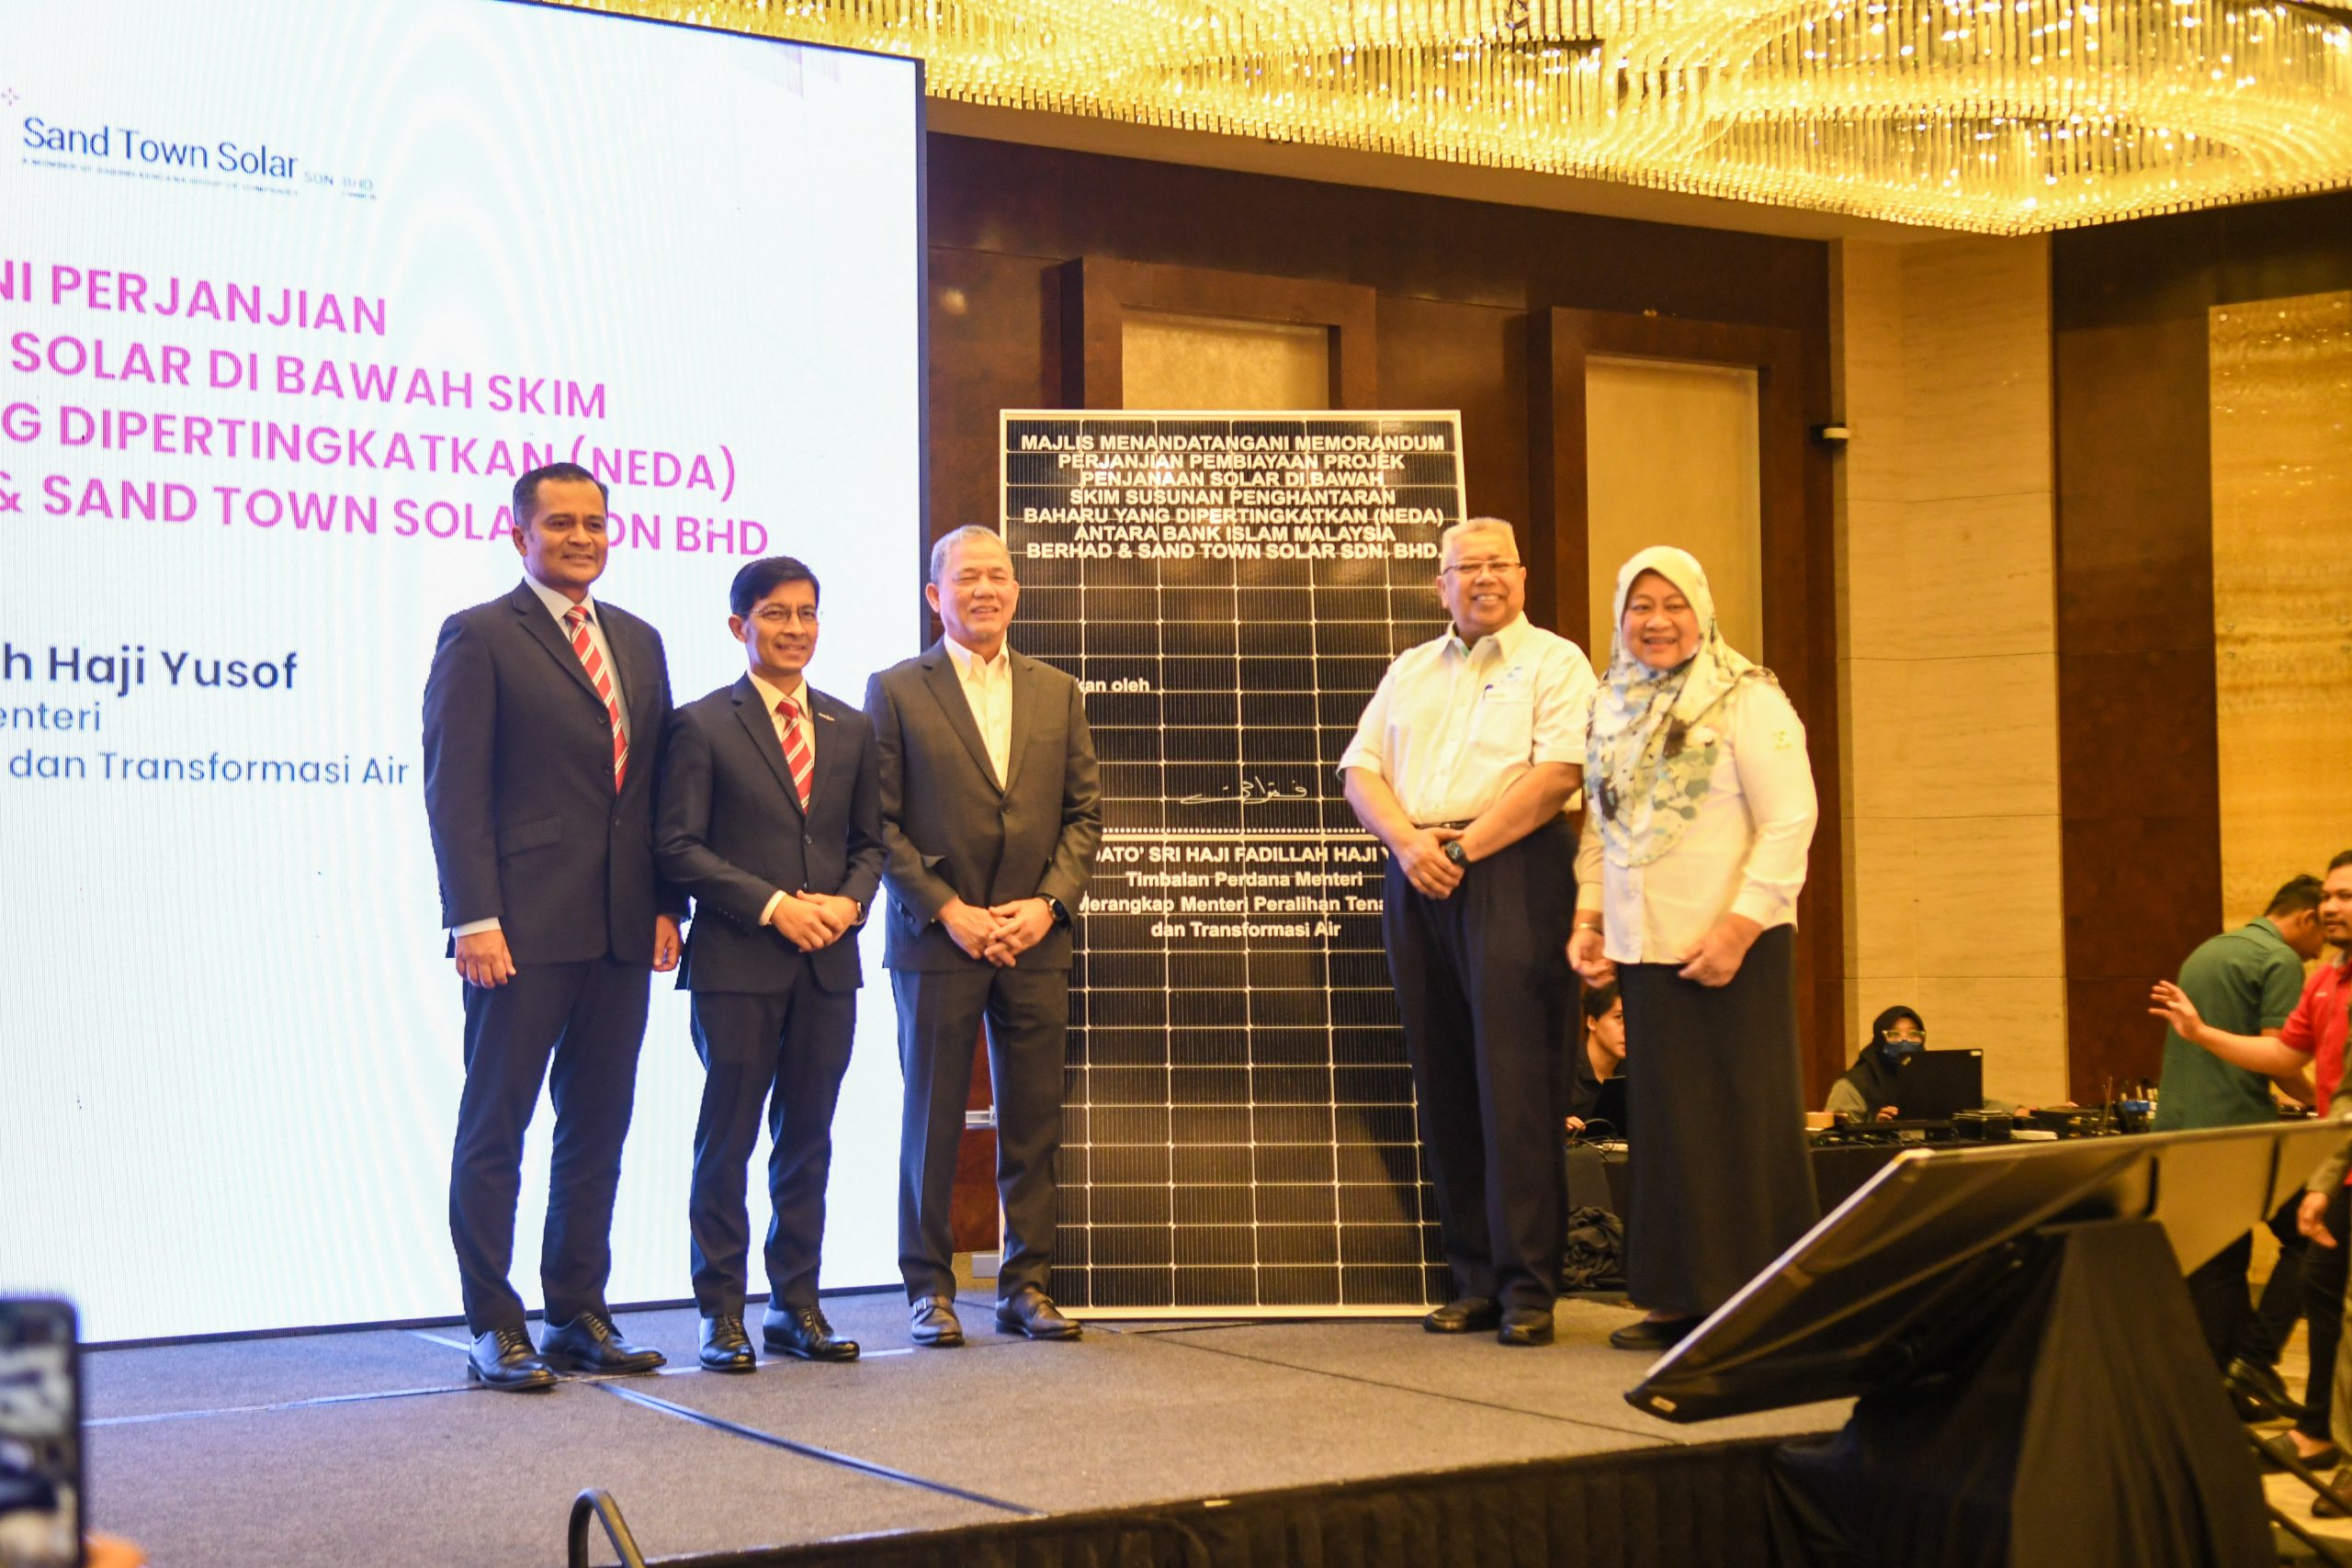 Bank Islam solar